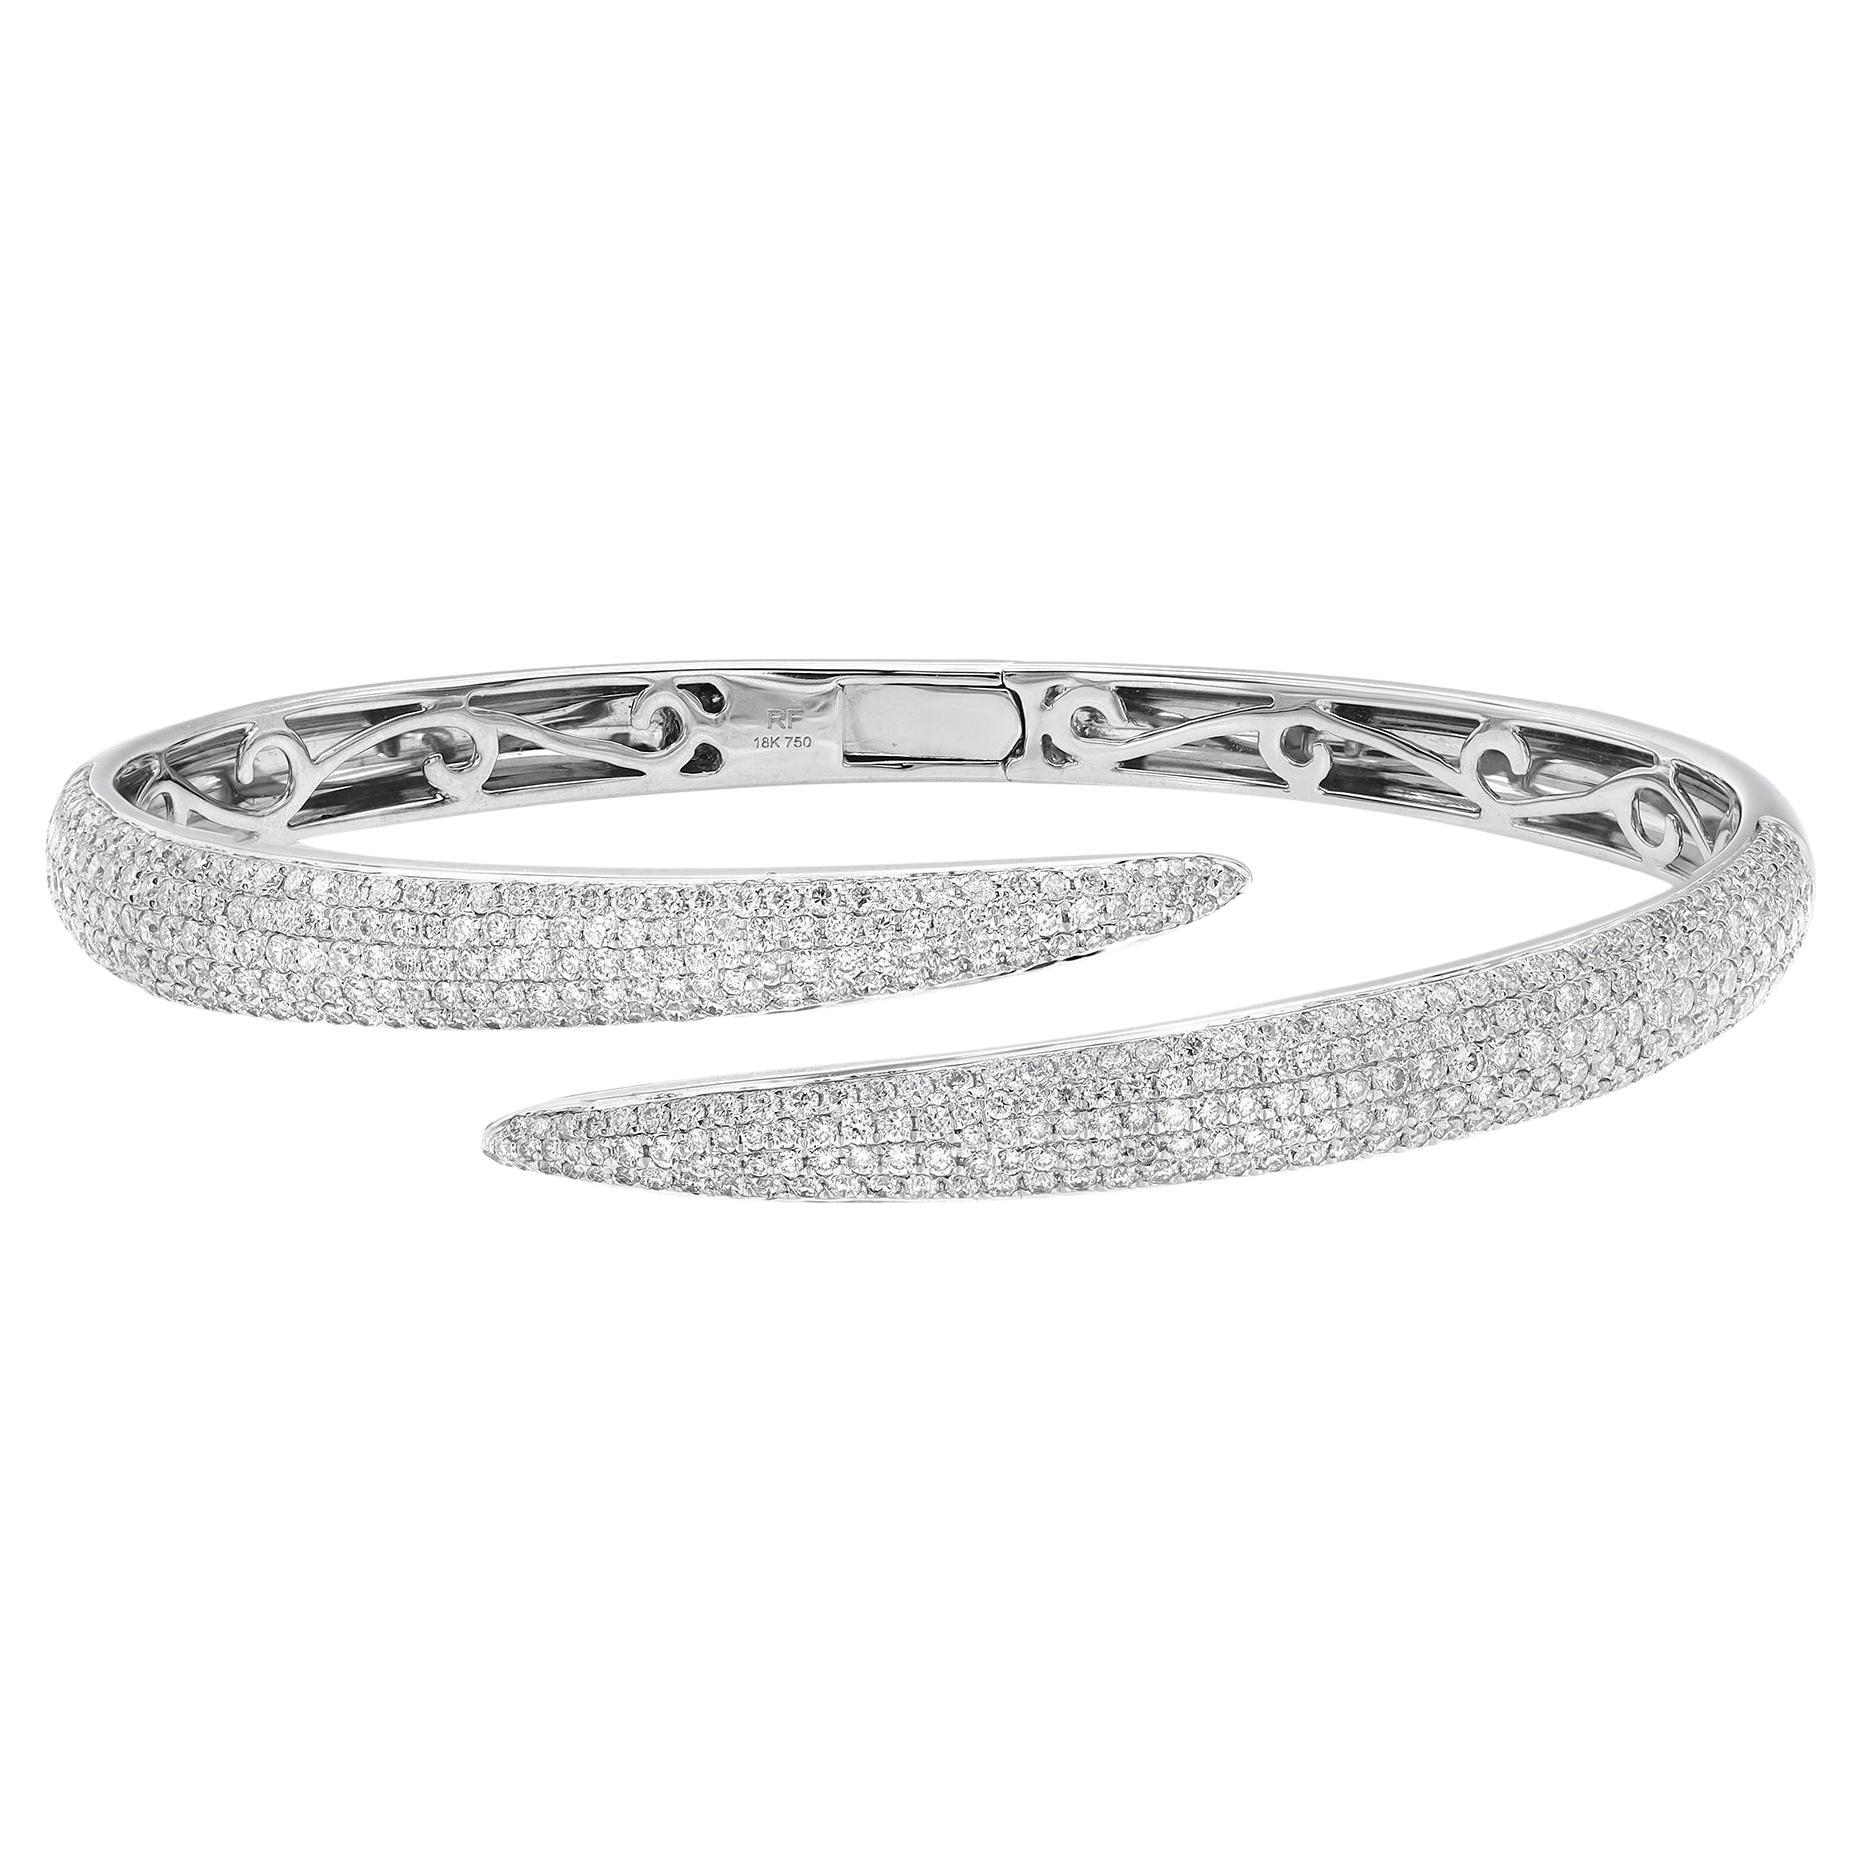 Rachel Koen Pave Set Round Cut Diamond Bangle Bracelet 18K White Gold 2.64Cttw For Sale